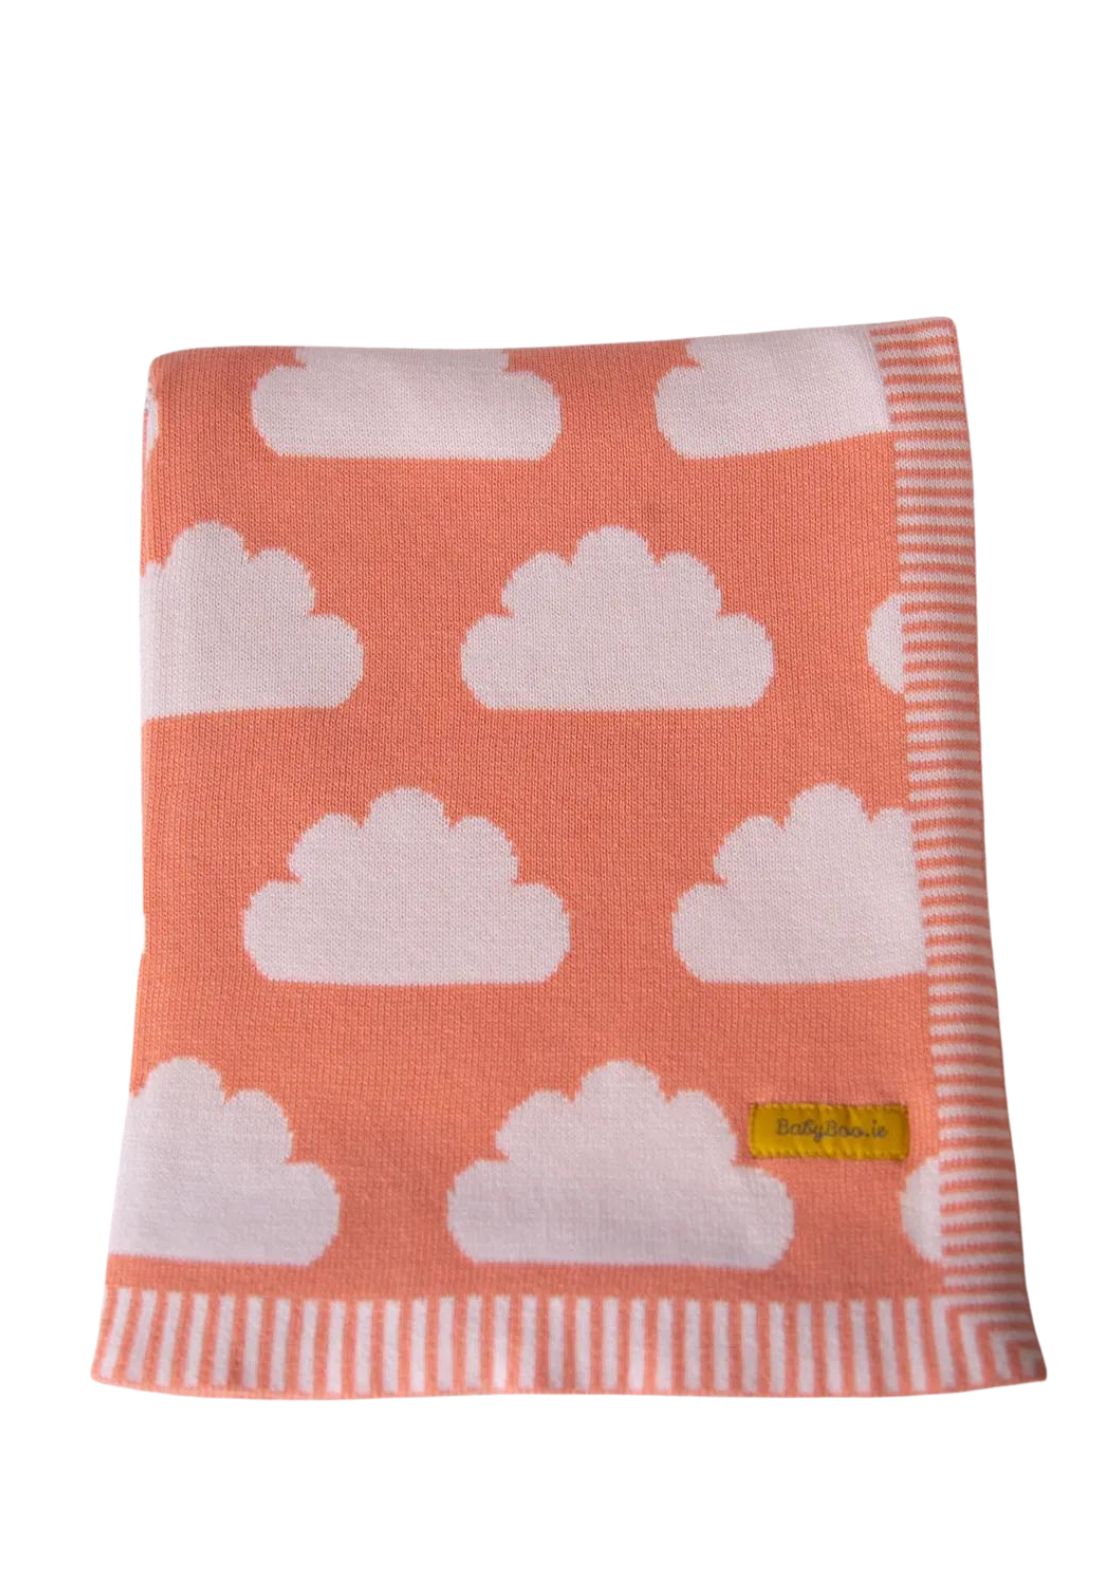 Babyboo Printed Blanket 1 Shaws Department Stores